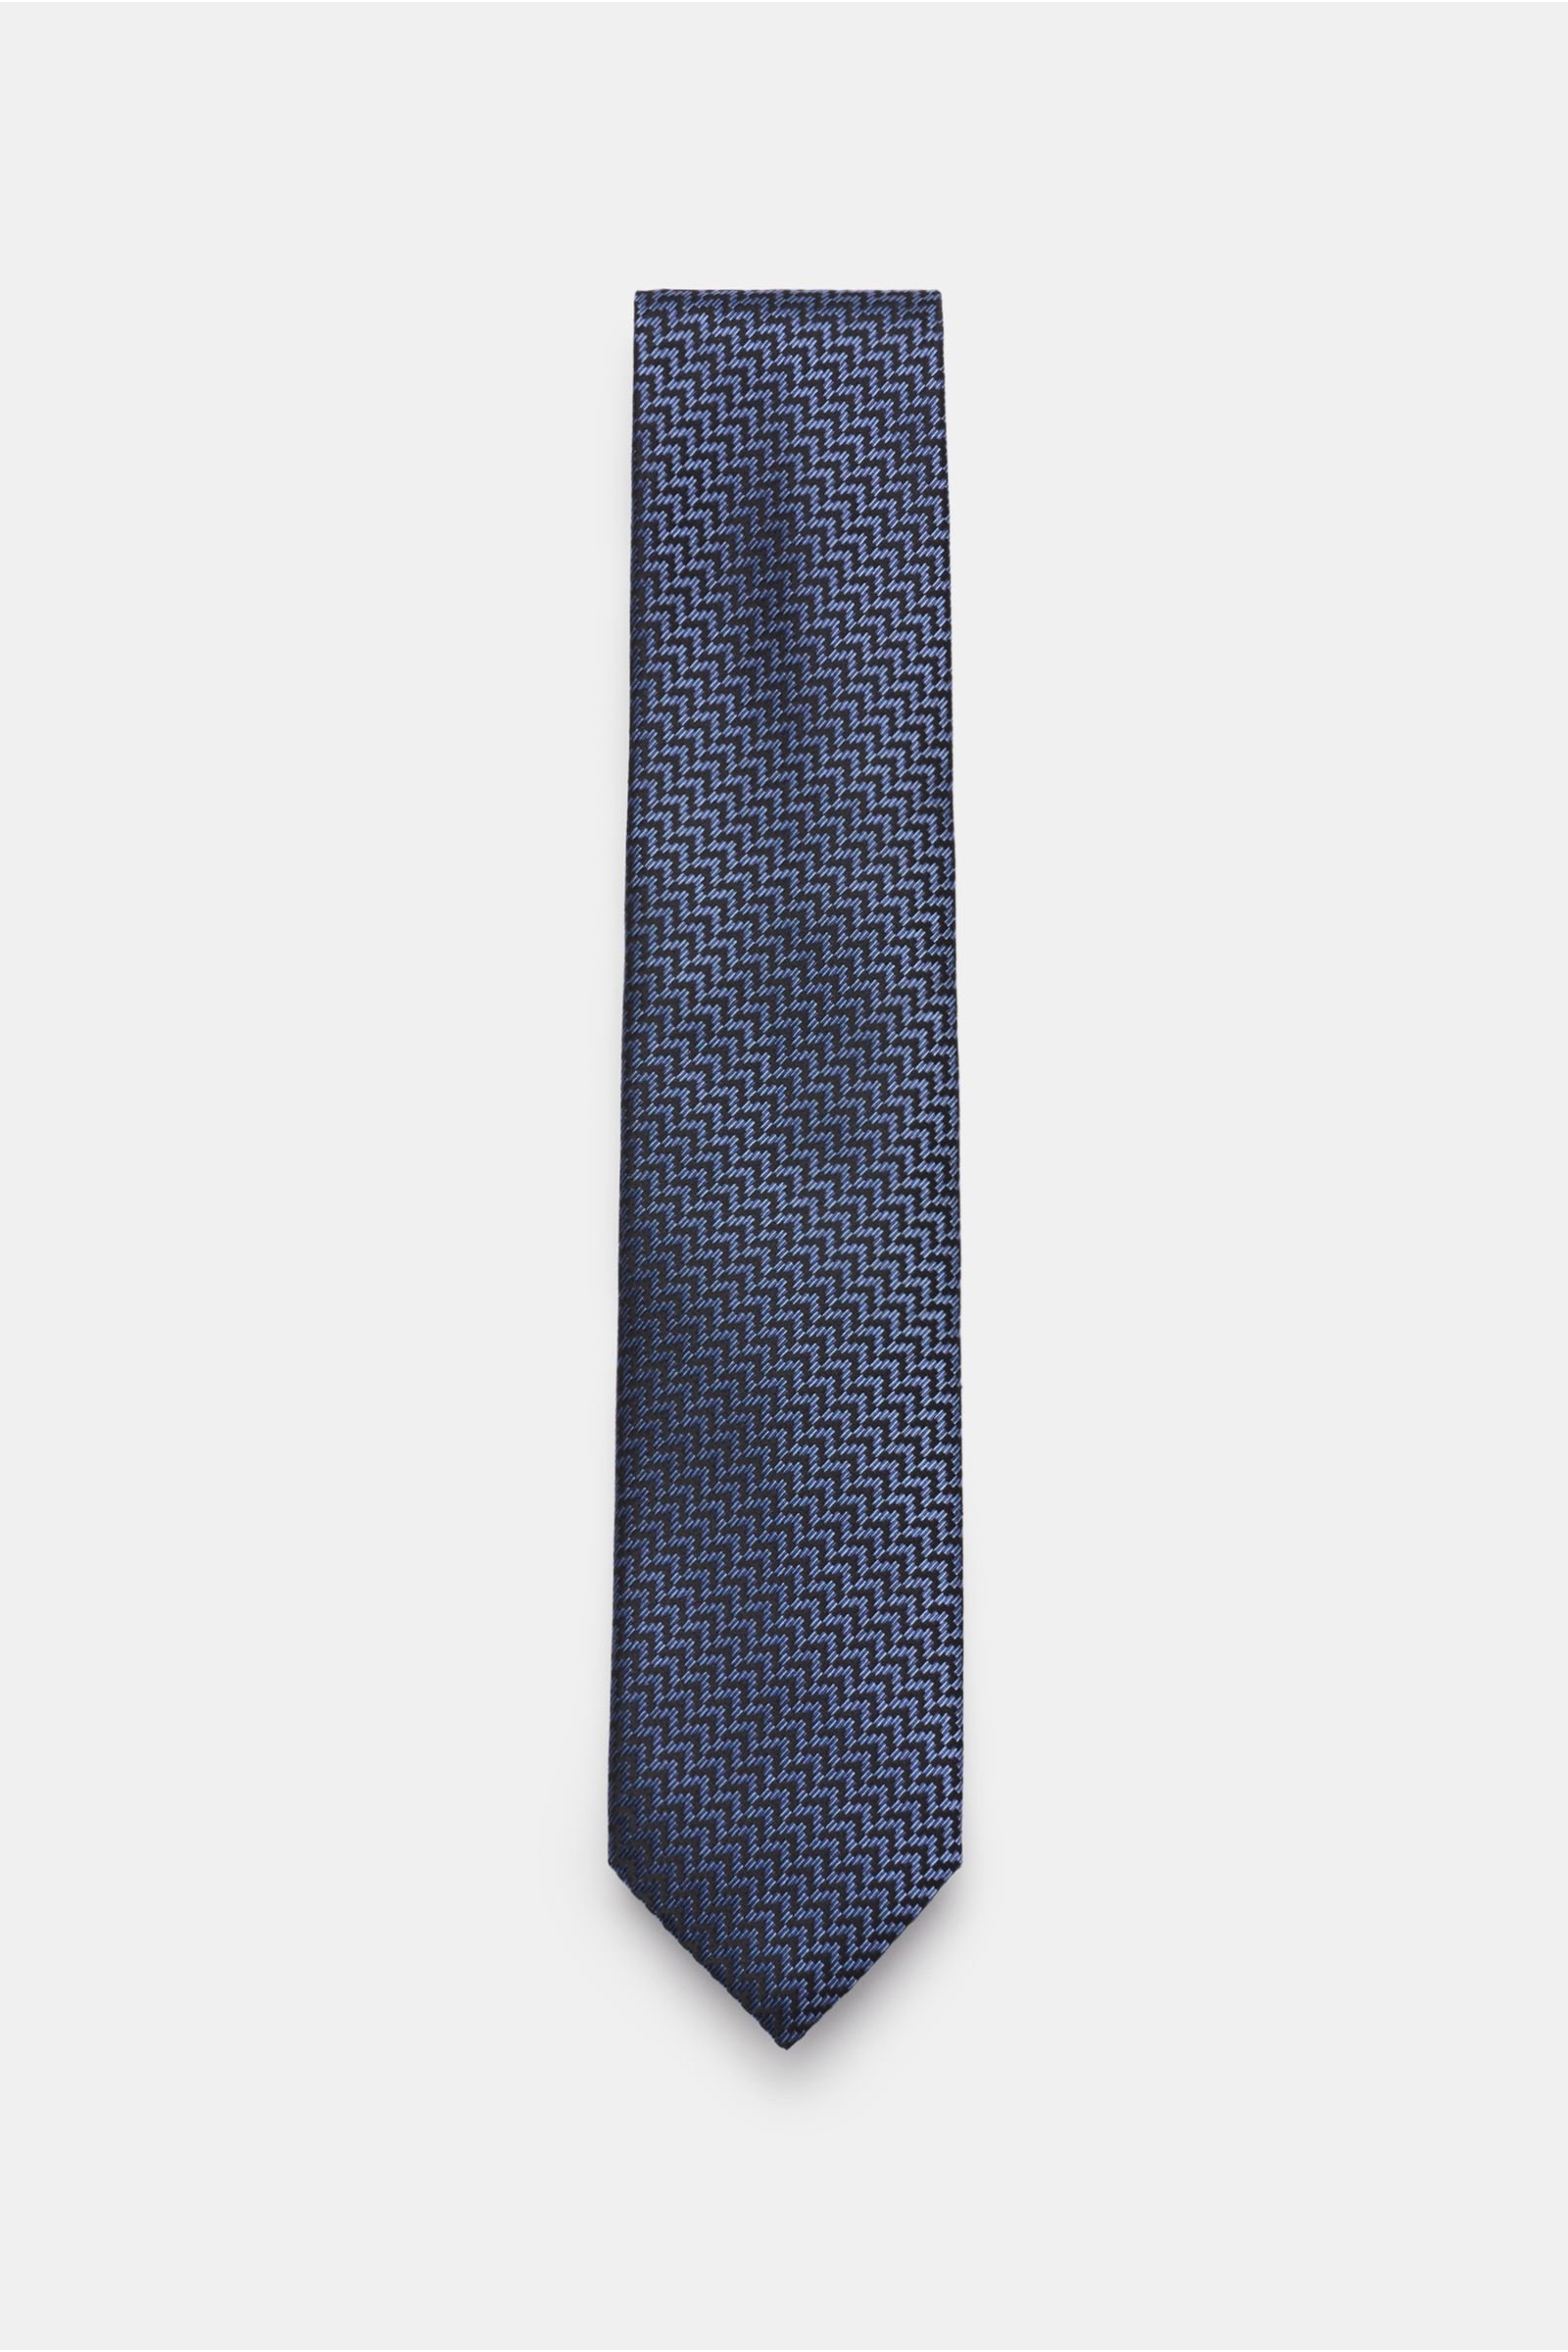 Silk tie smoky blue/black patterned